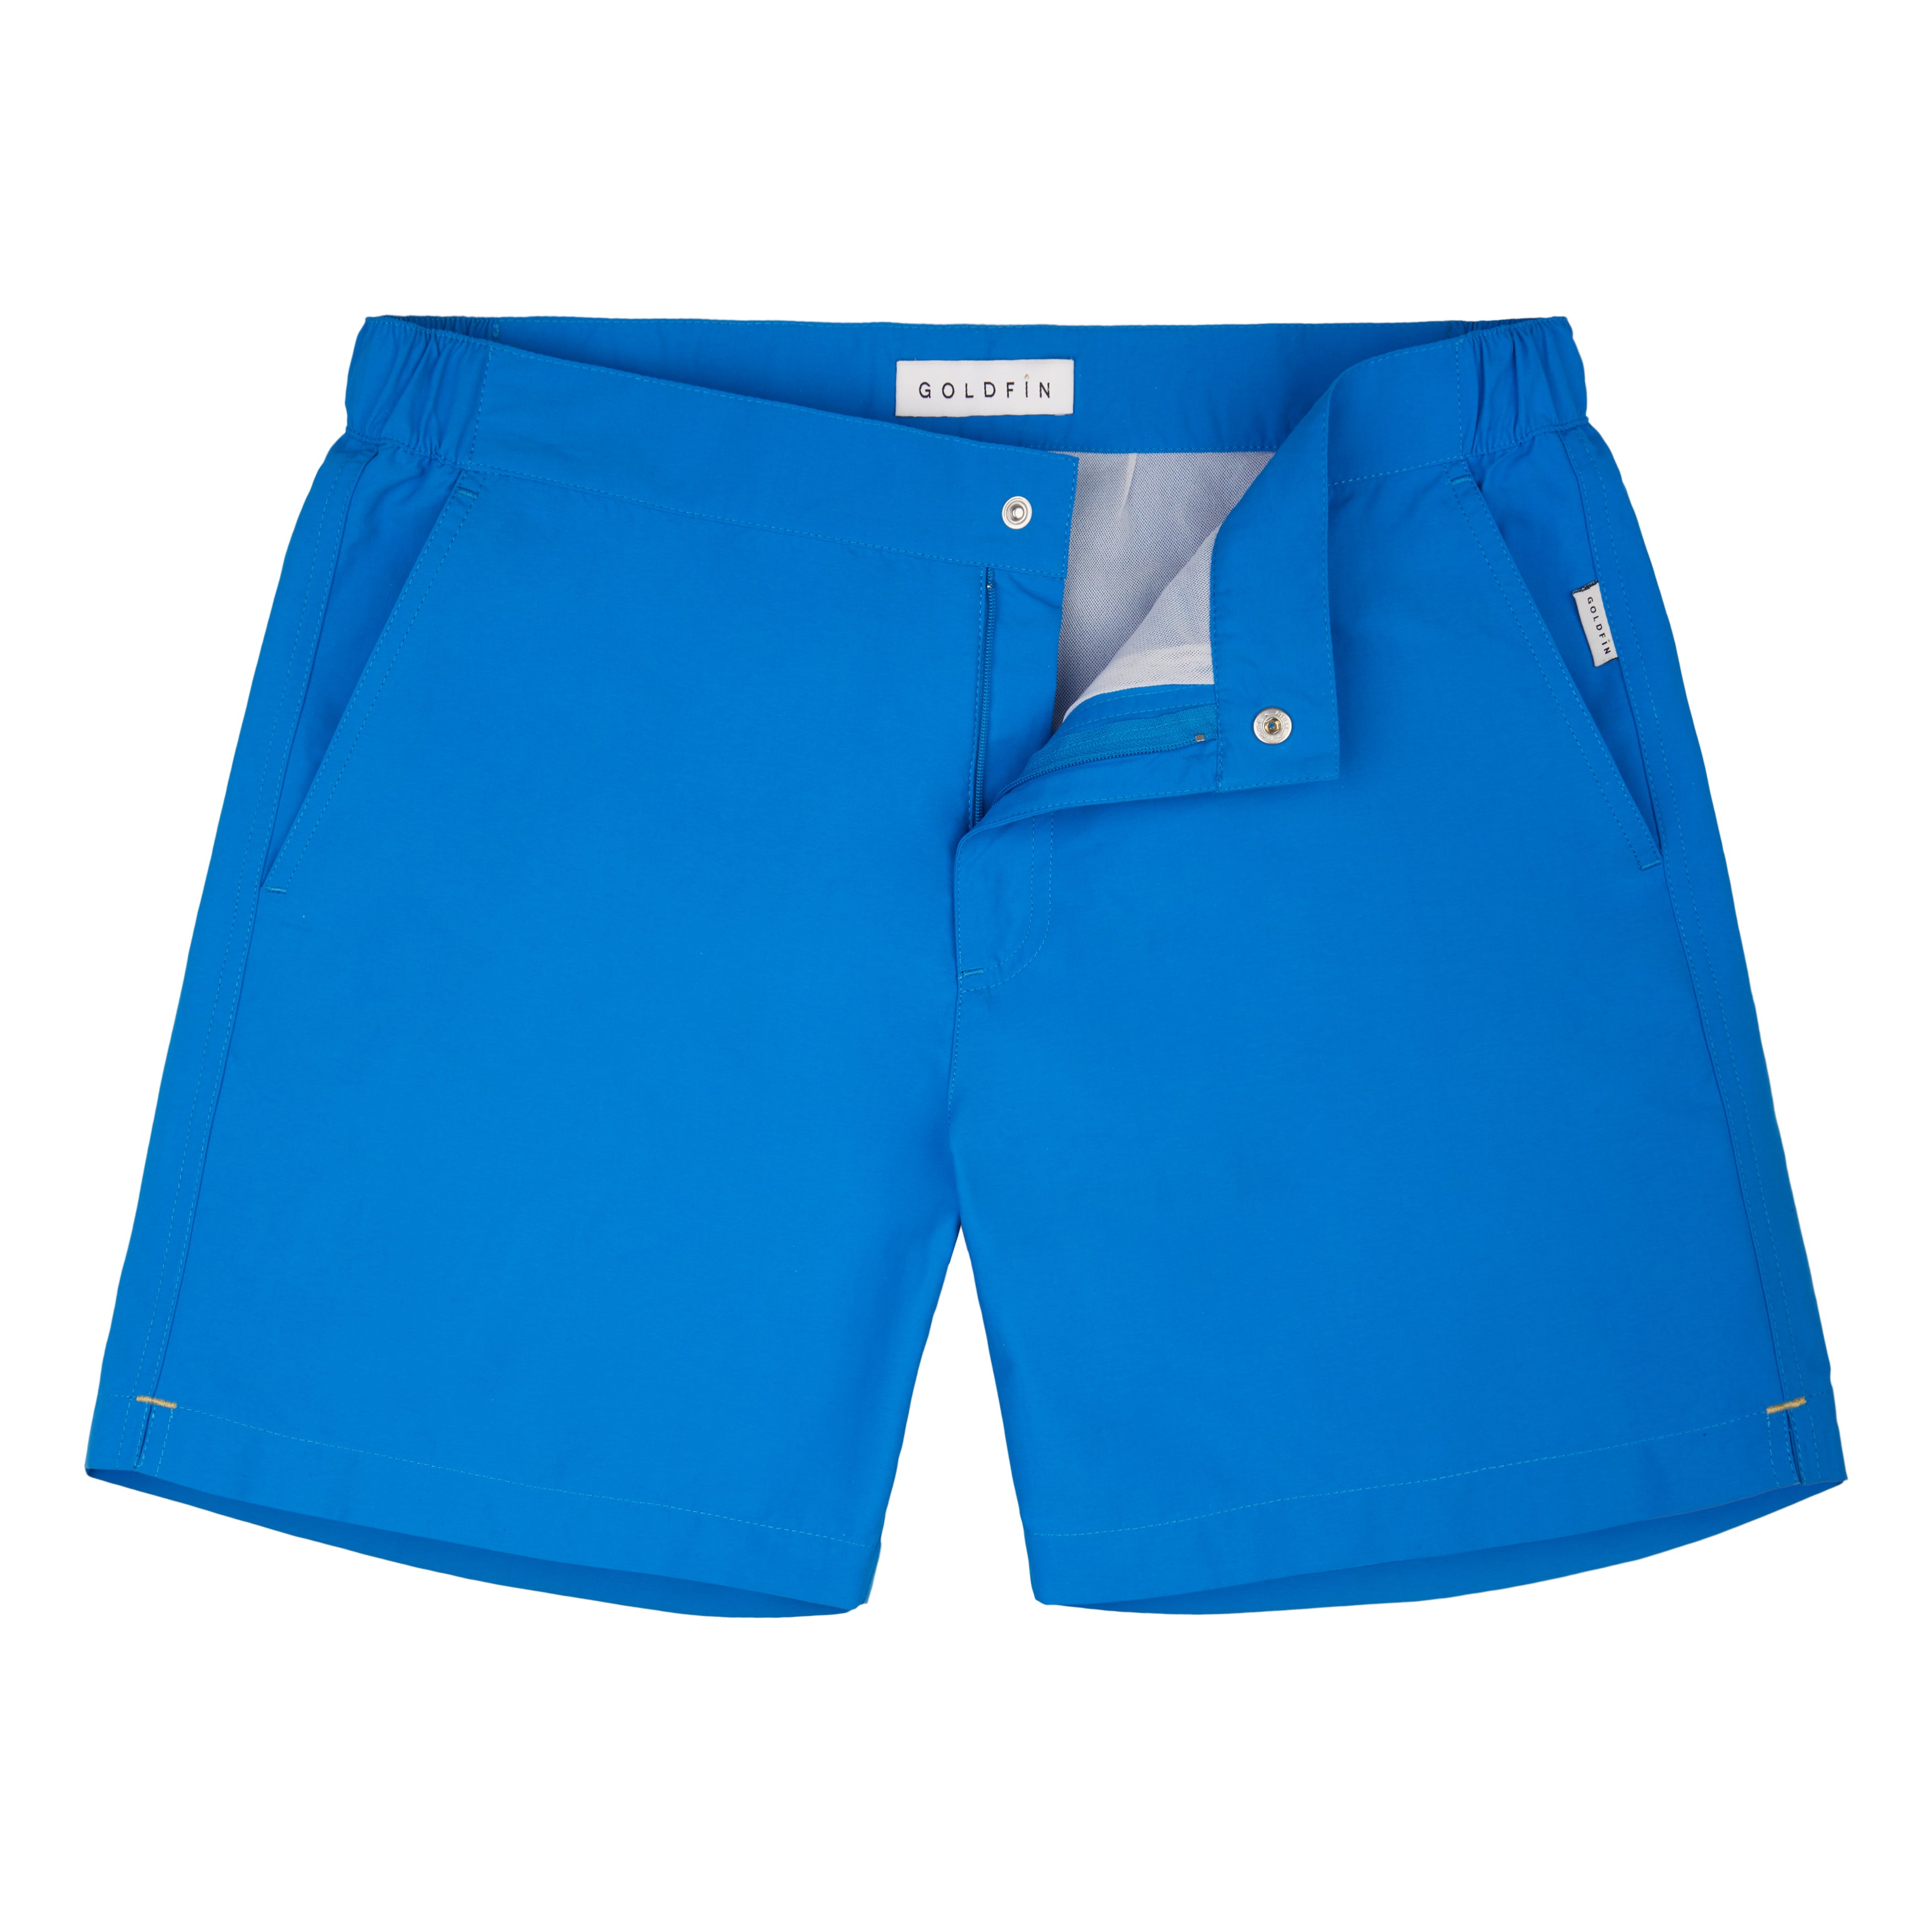 Electric Blue Swim Shorts - GOLDFIN Swim Shorts 